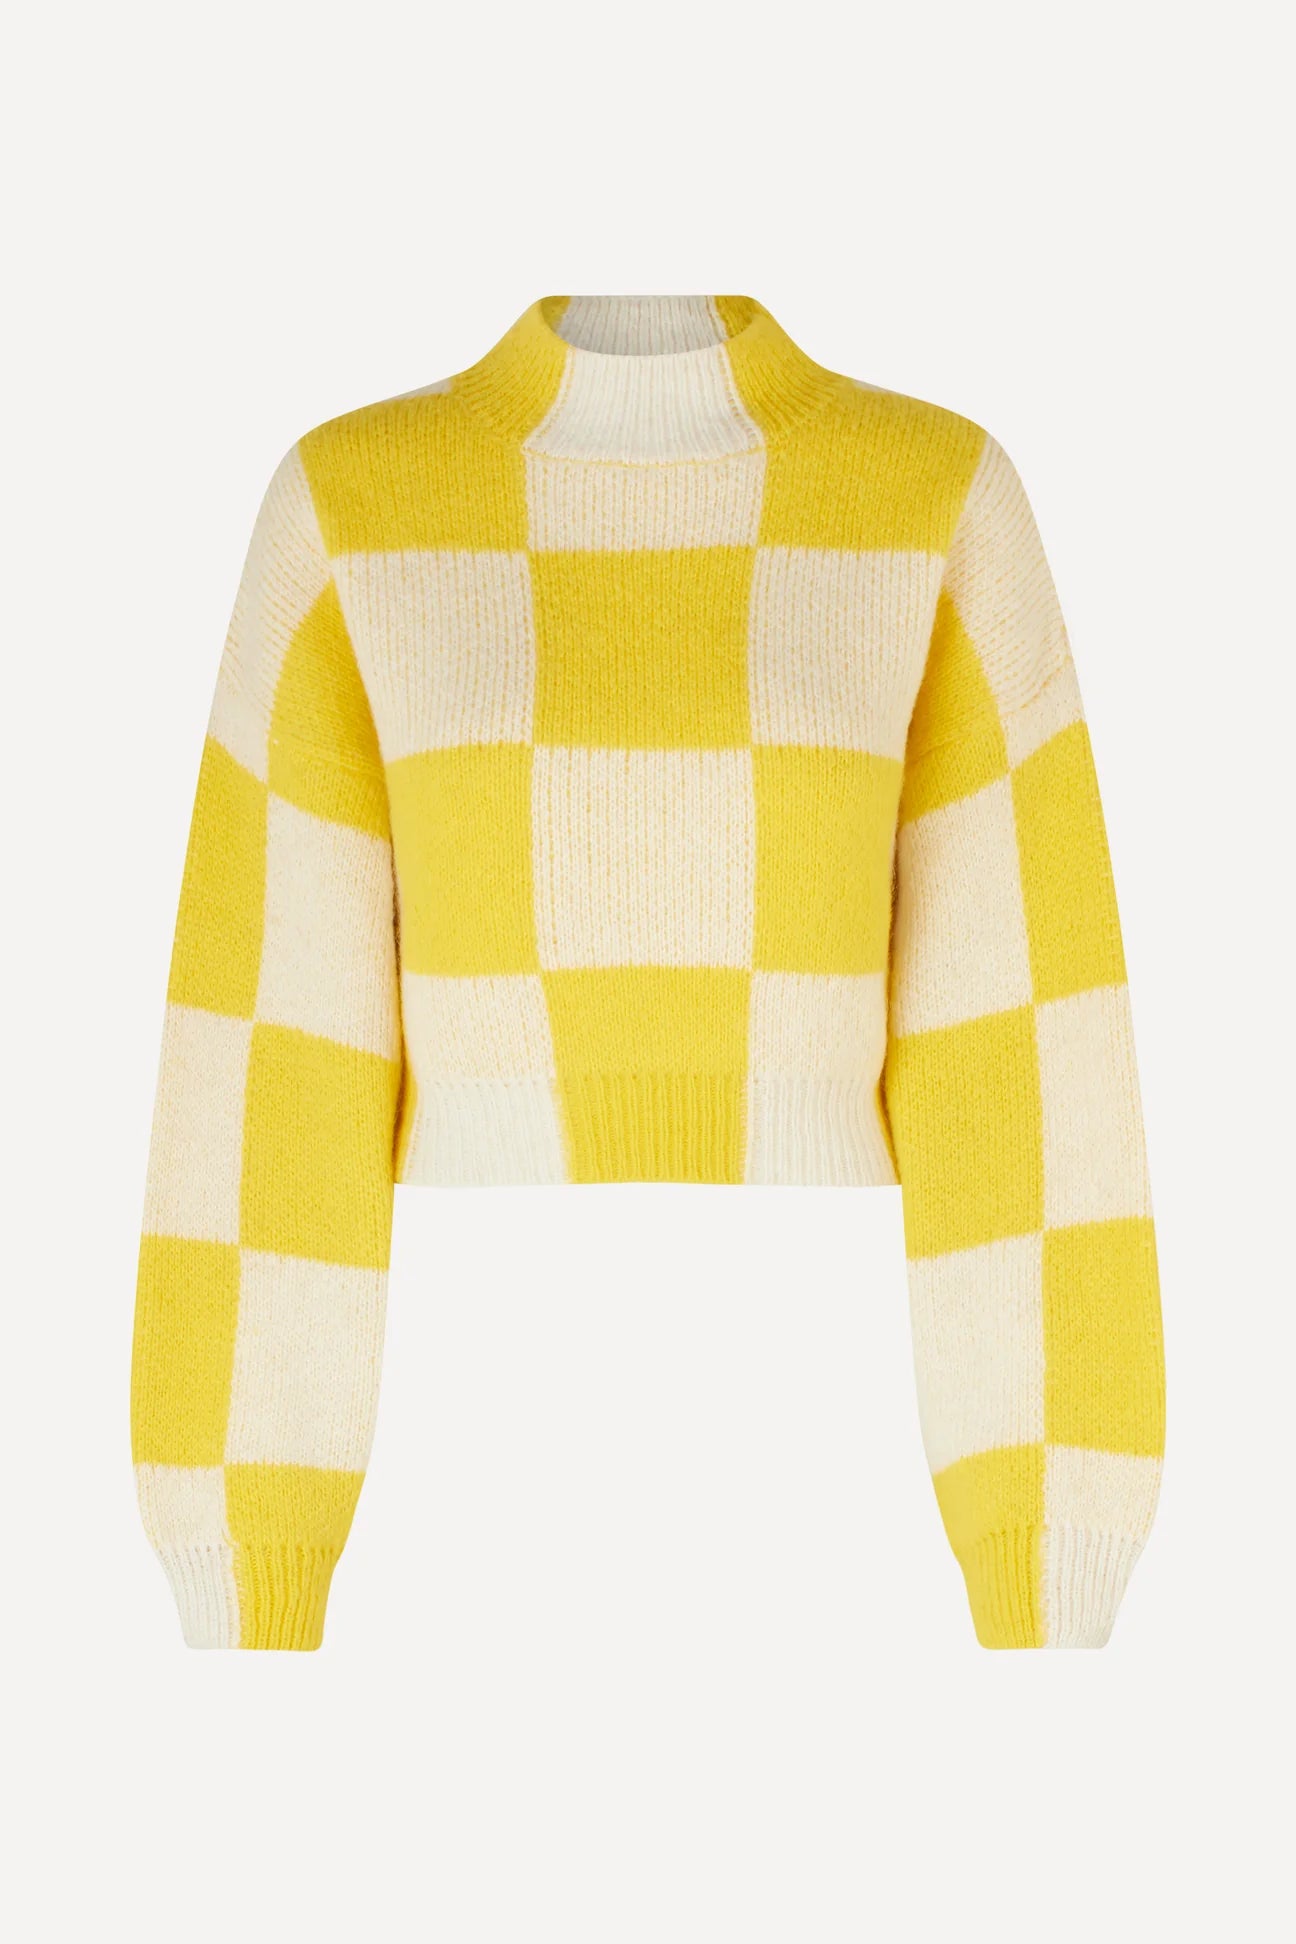 Stine Goya Francesca Adonis Sweater - Sunrise Check